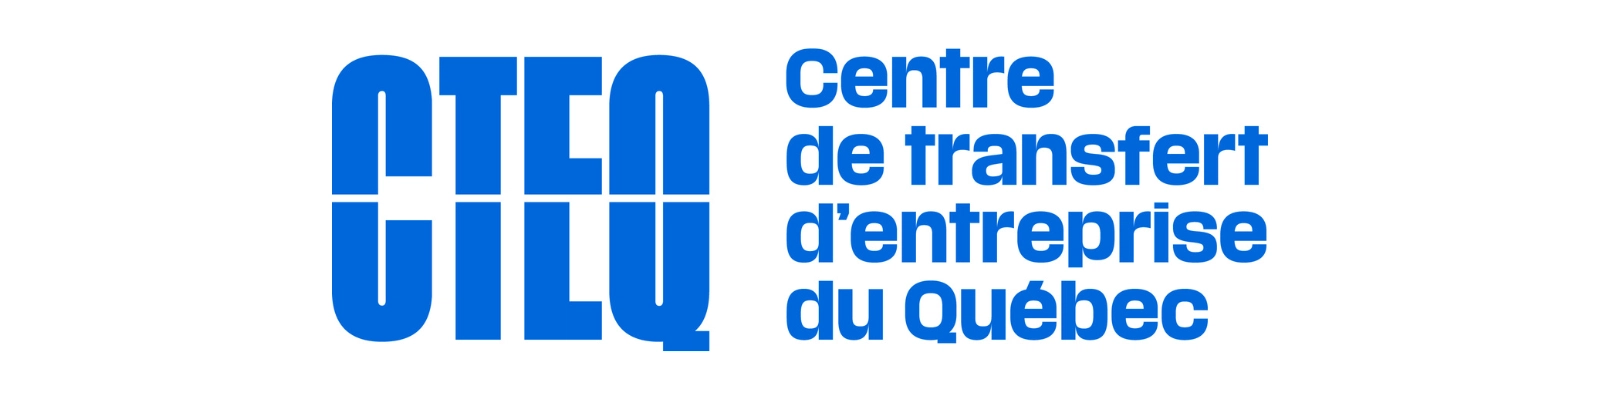 CTEQ logo